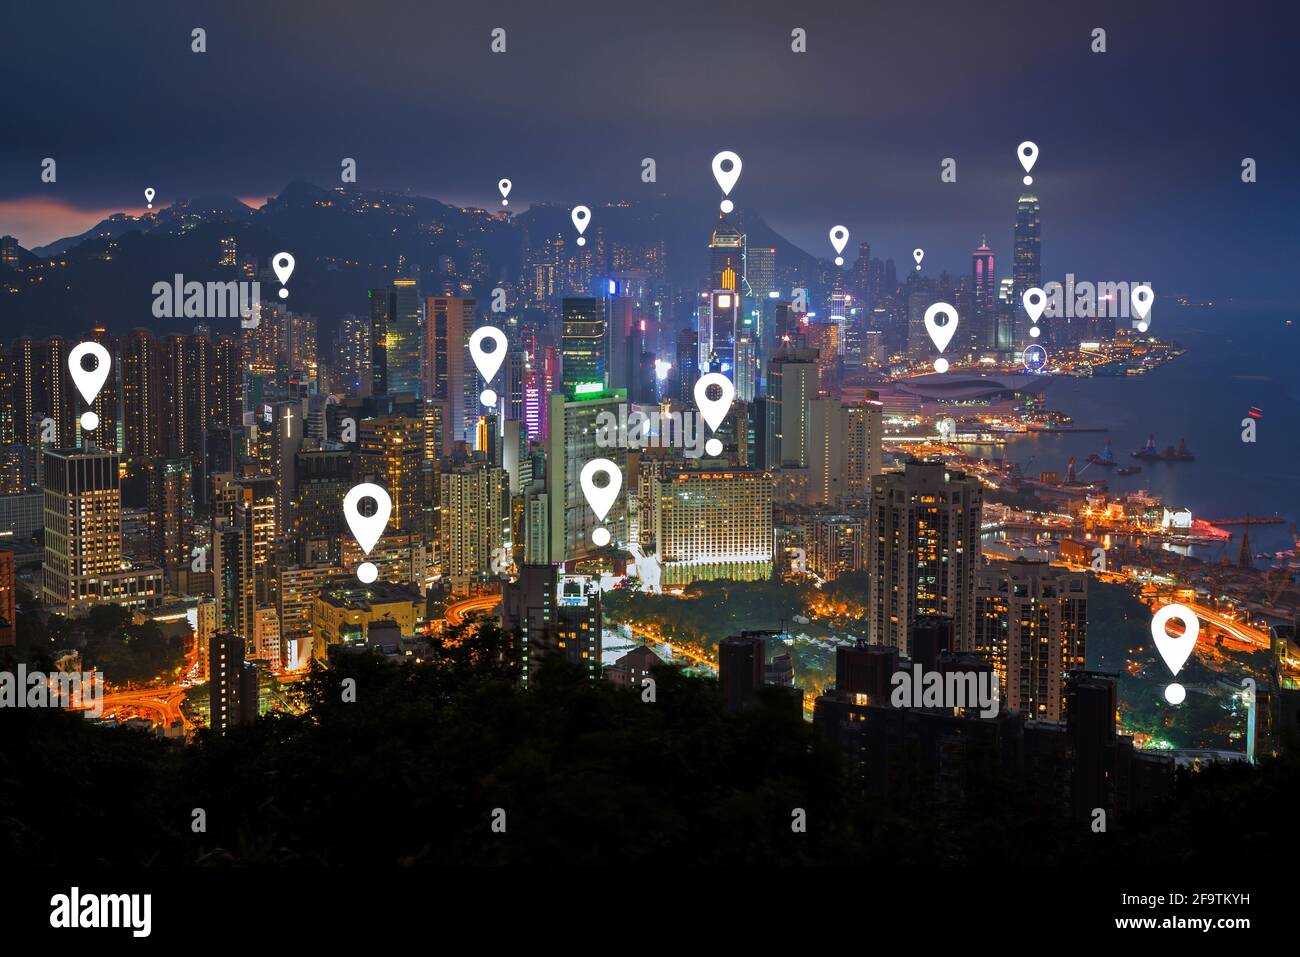 Map pin icons on Hong Kong's cityscape at night. Lit skyscrapers on Hong Kong Island in Hong Kong, China, viewed from above at dusk. Stock Photo